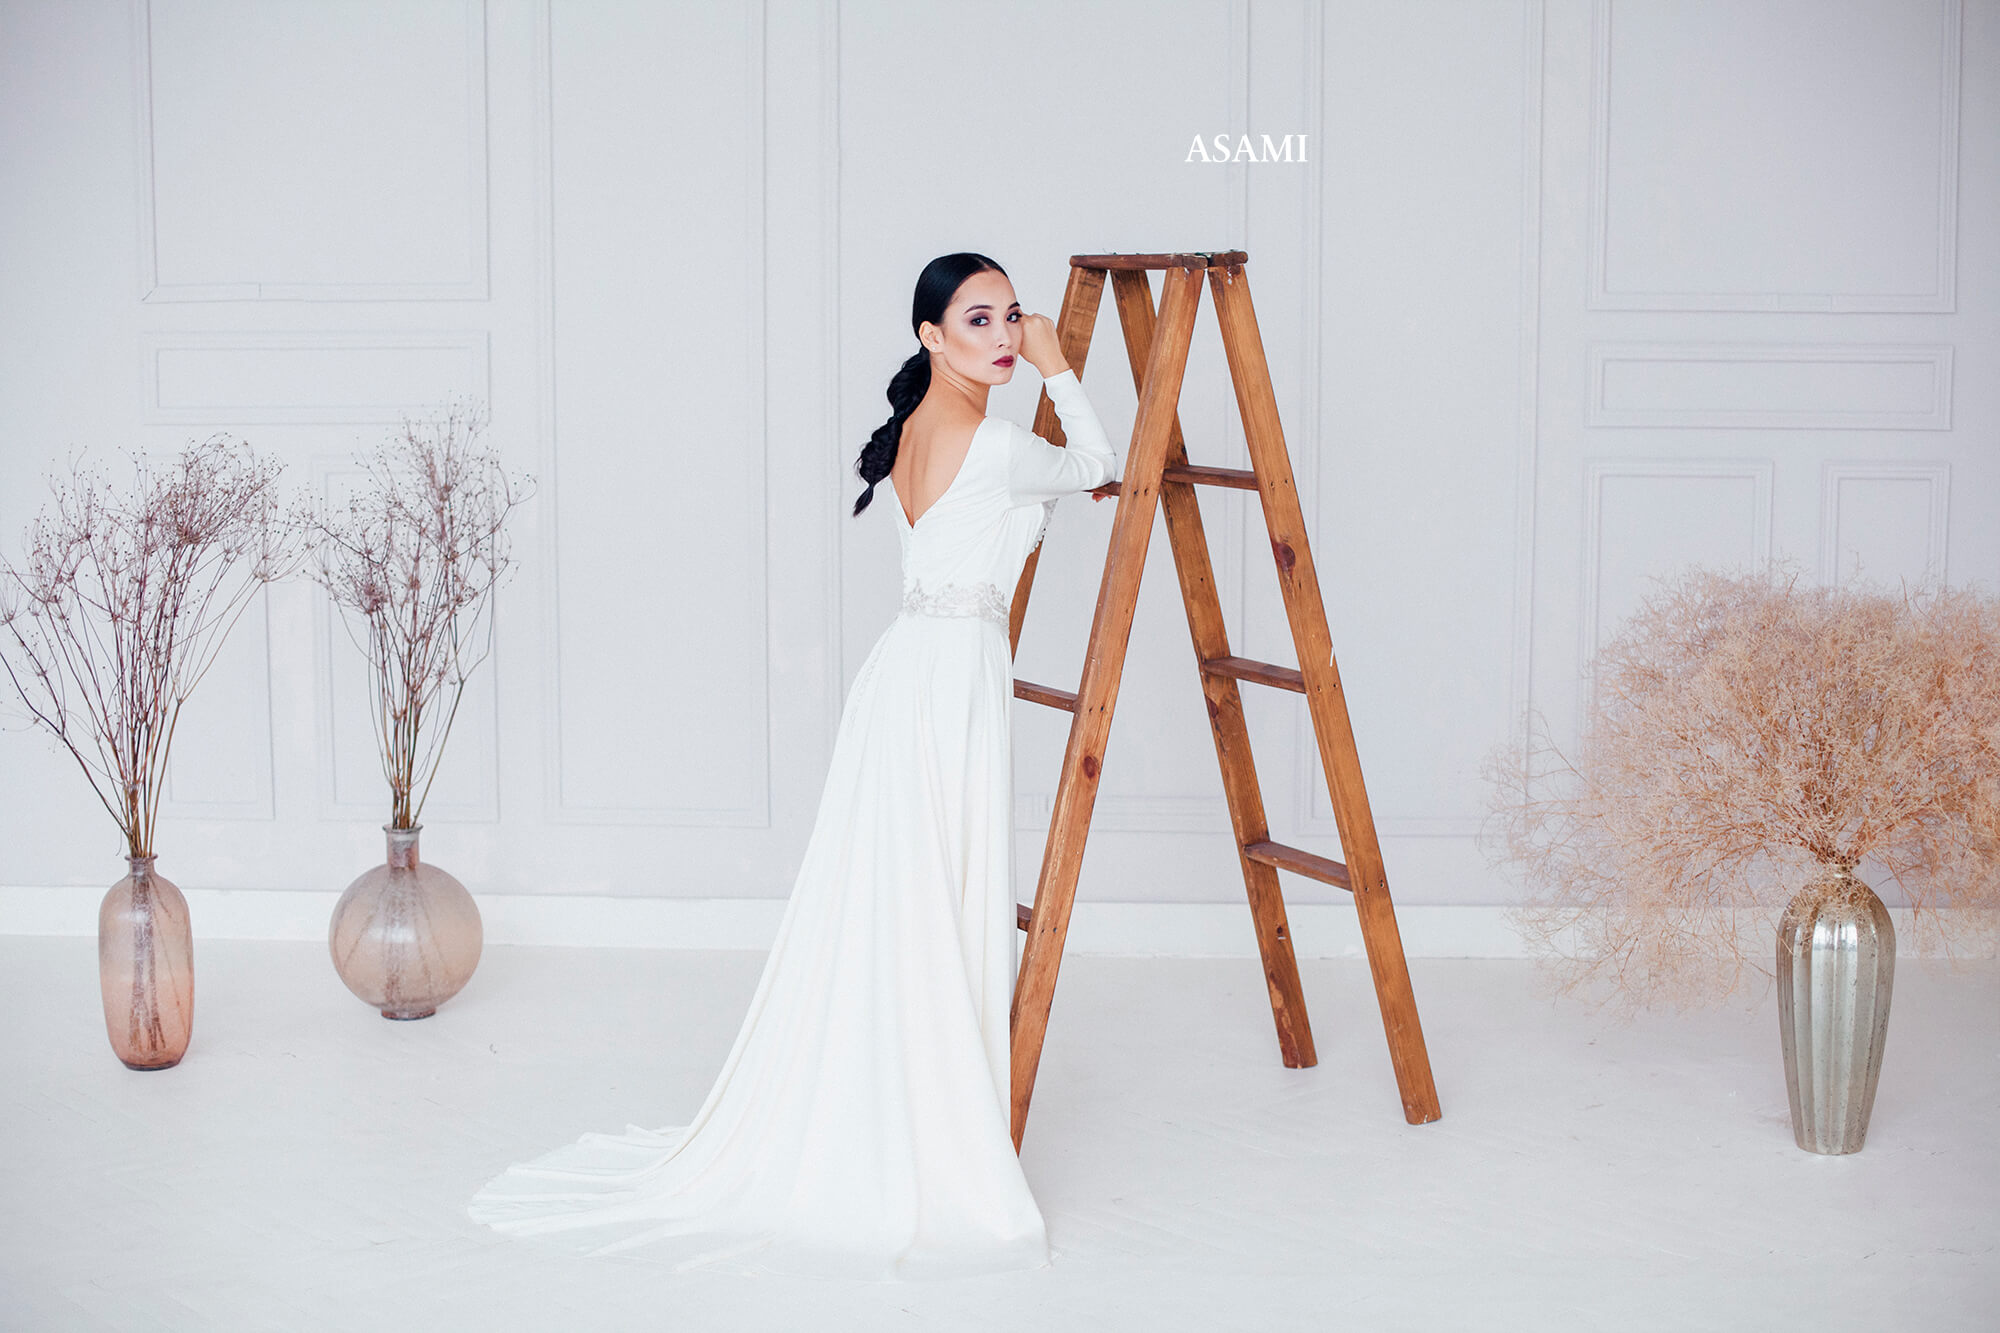 ASAMI - wedding dress "Refined Elegance" collection